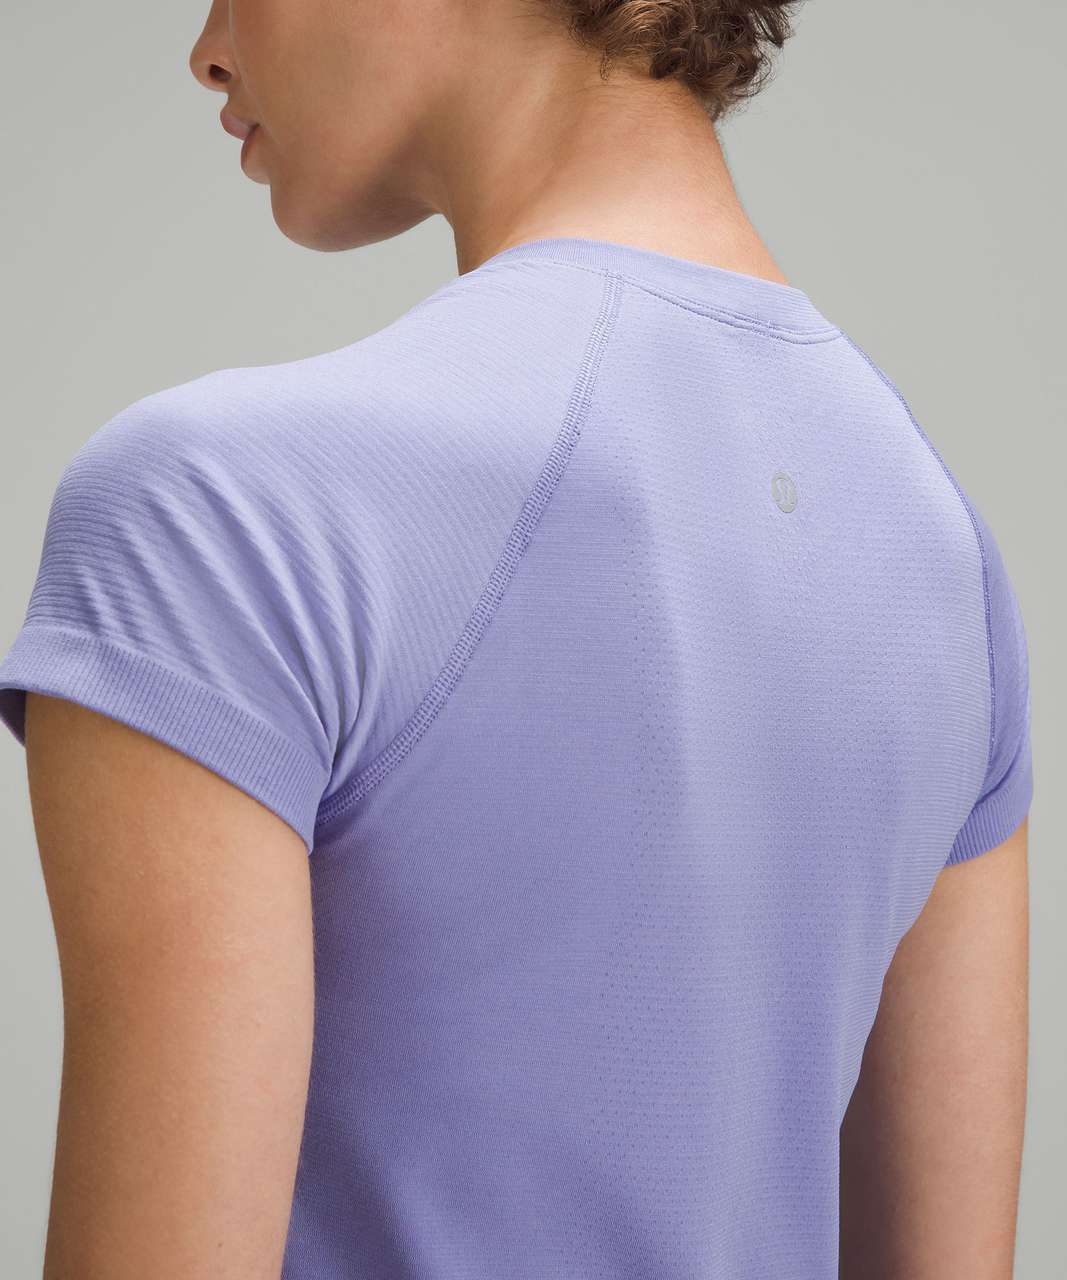 Lululemon Swiftly Tech Short-Sleeve Shirt 2.0 *Race Length - Dark Lavender / Dark Lavender